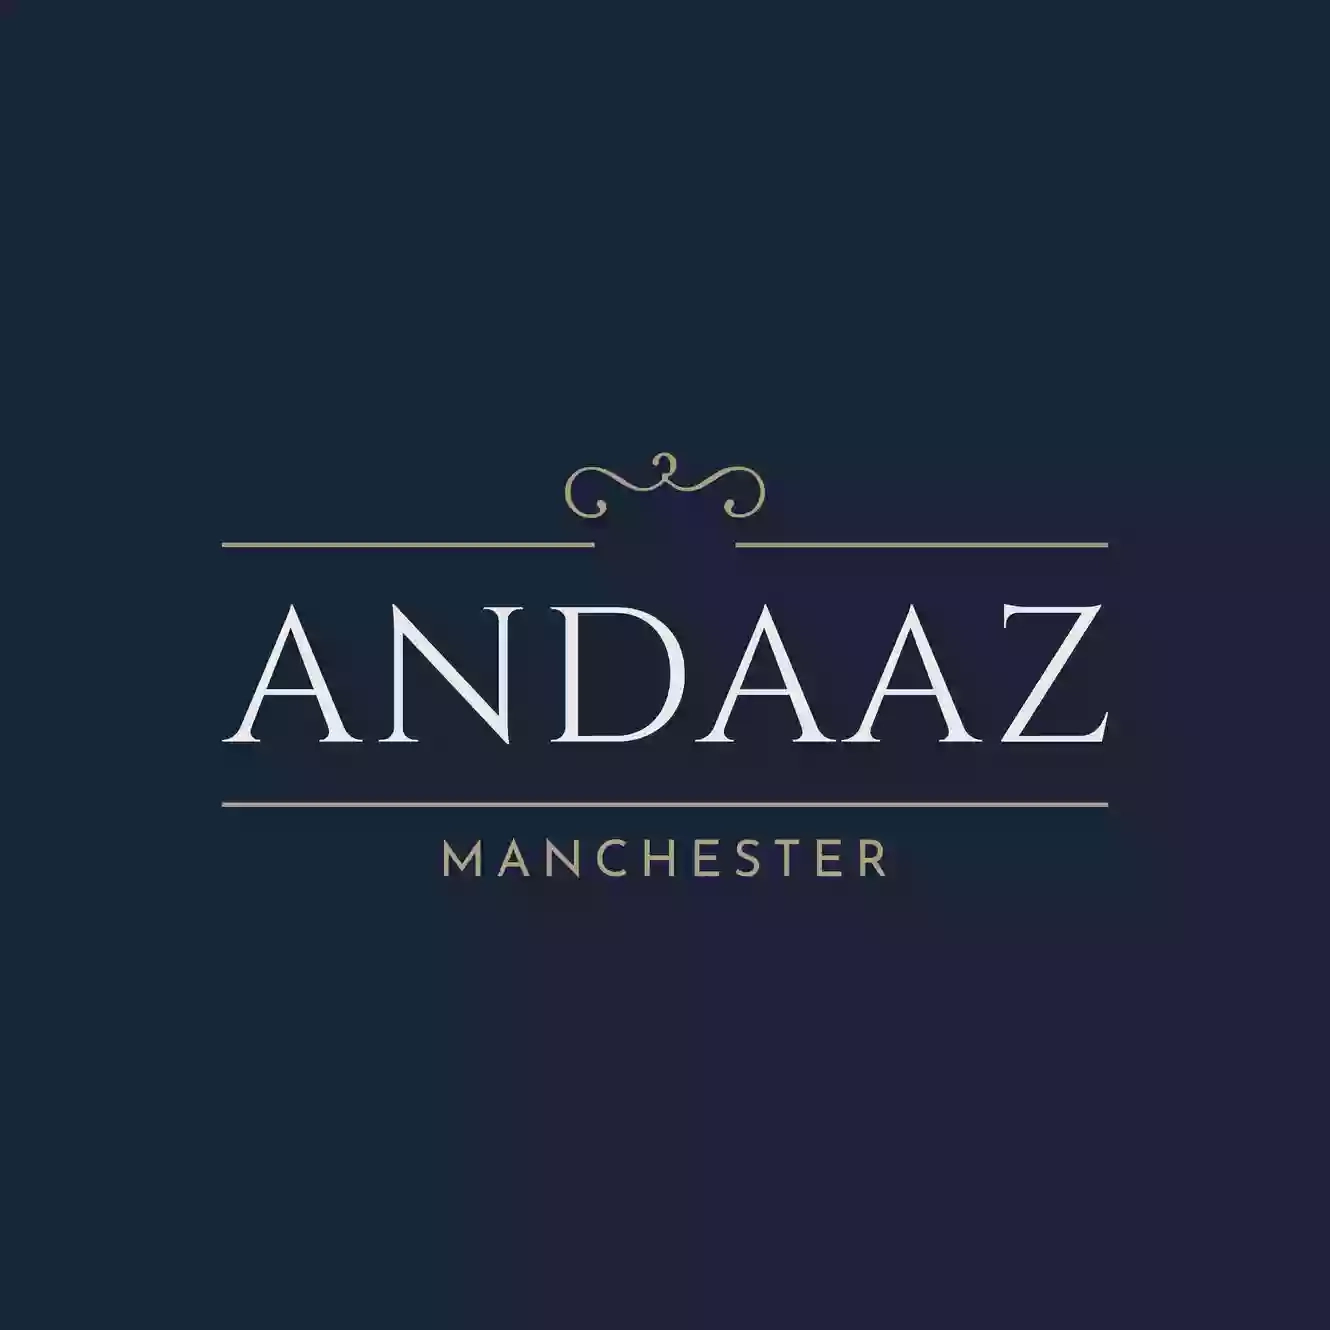 ANDAAZ Manchester